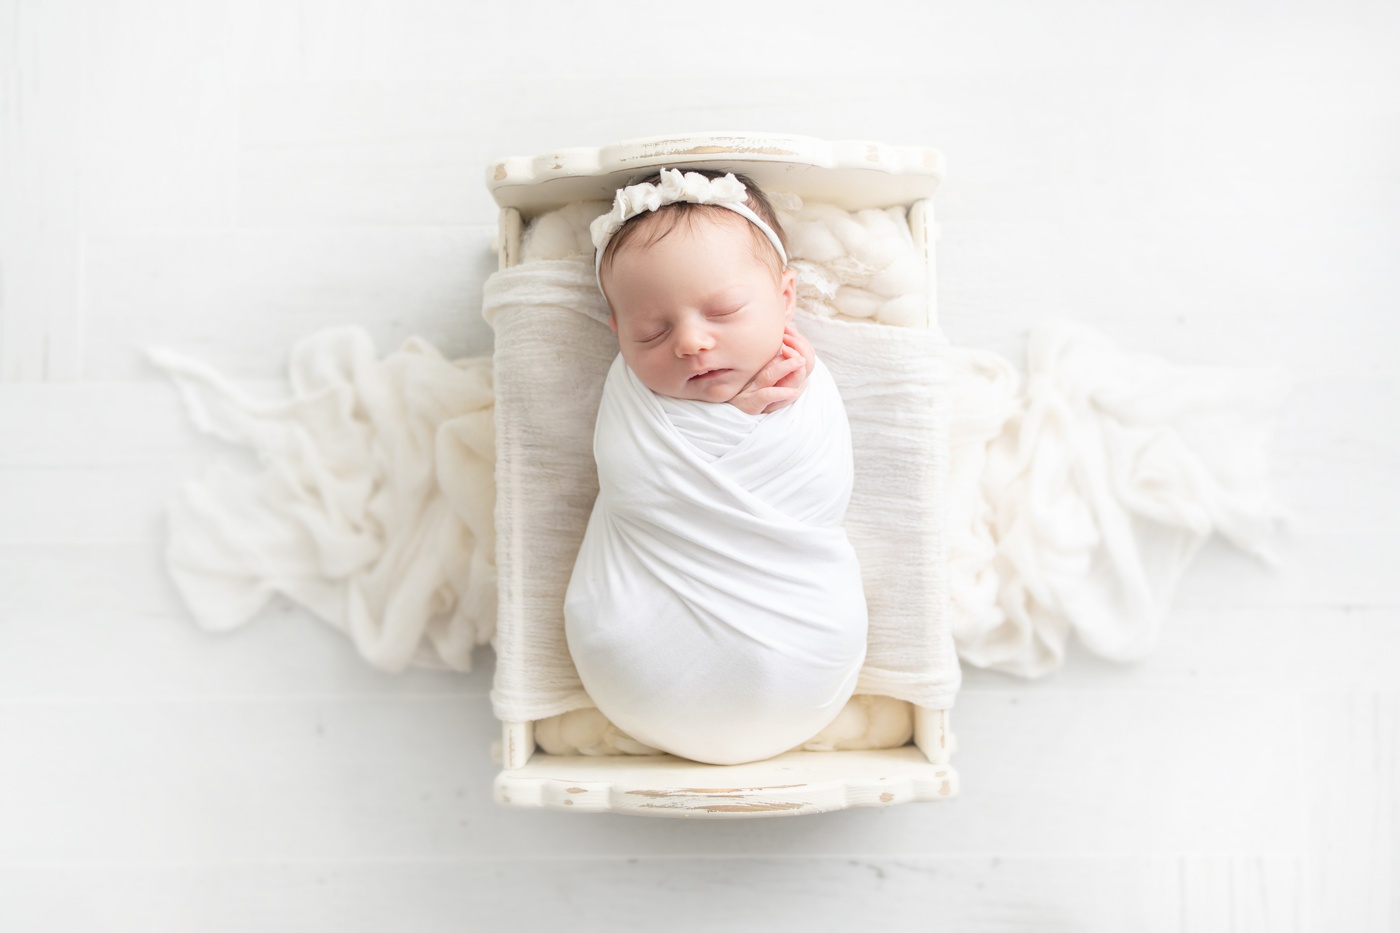  newborn baby in a cream cradle prop